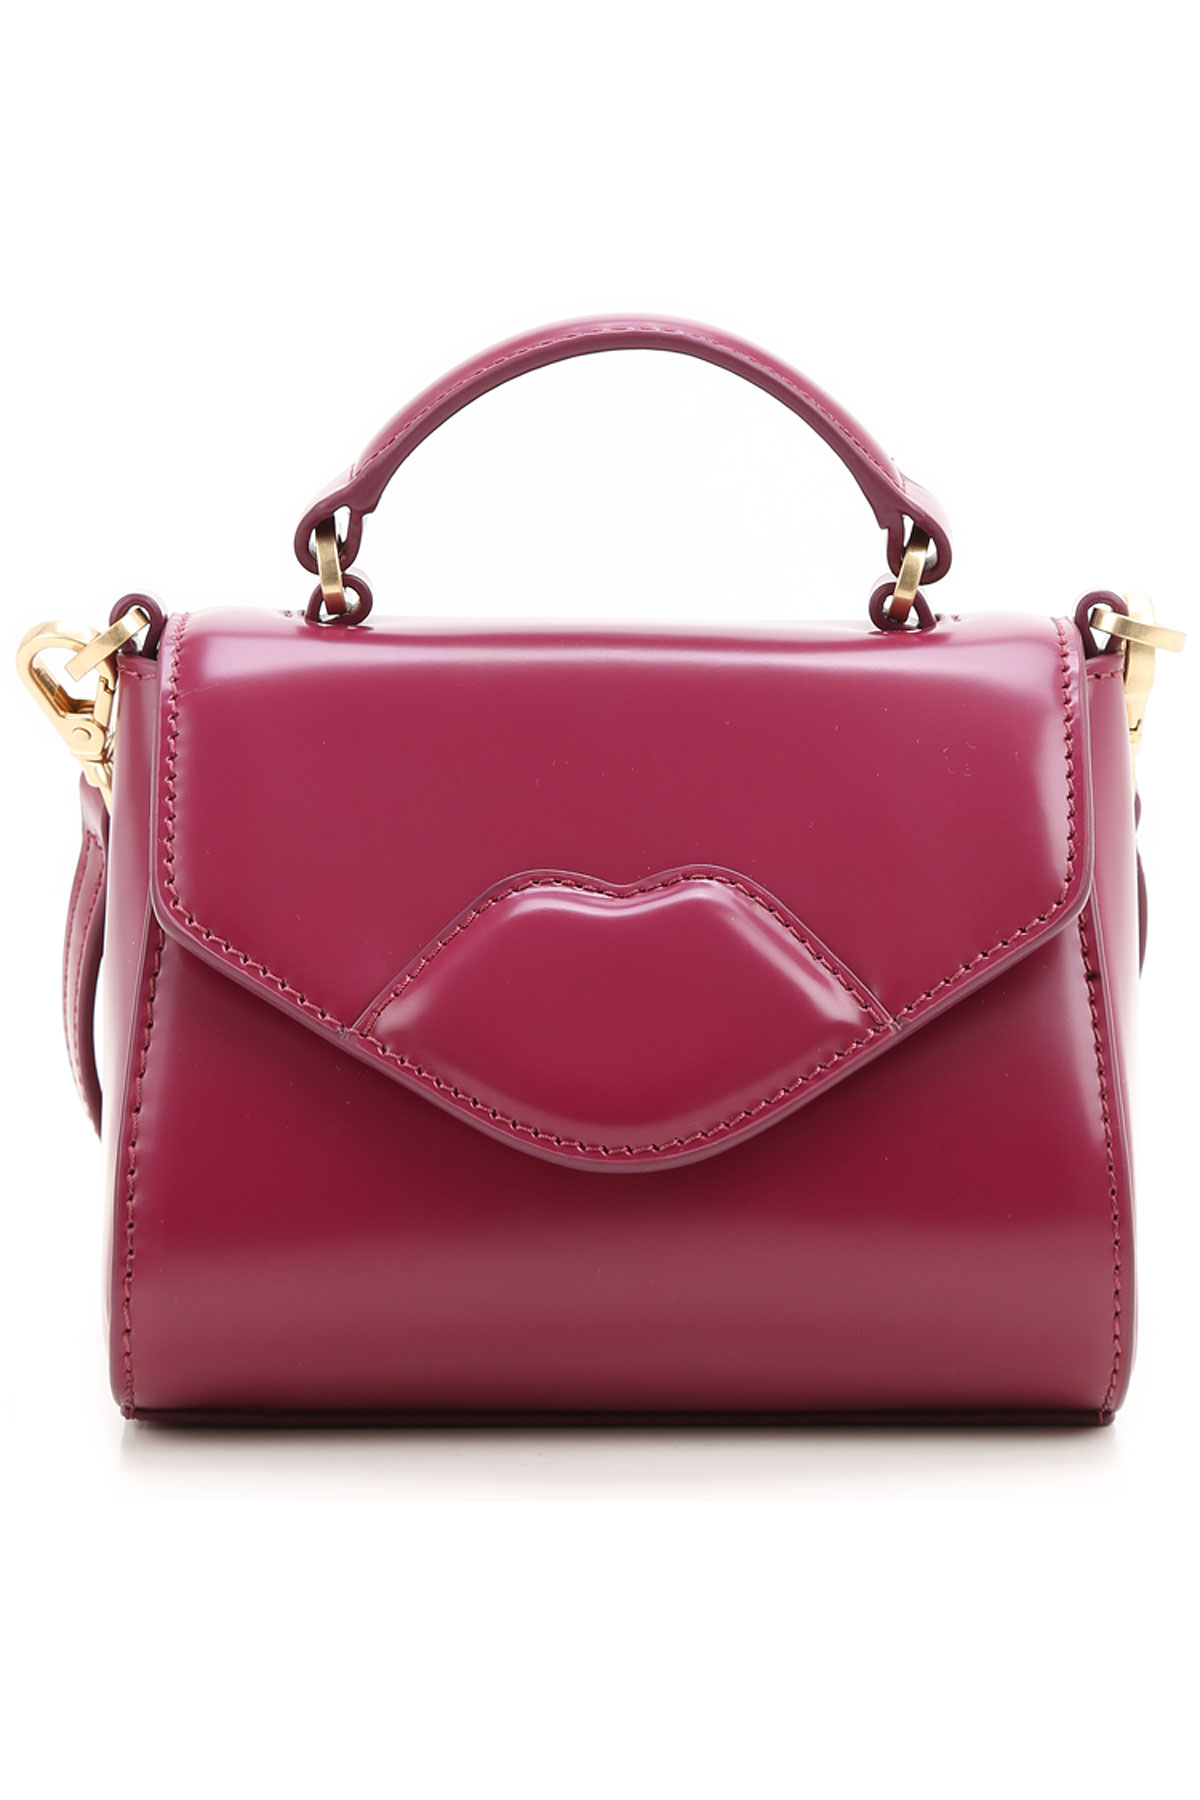 Handbags Lulu Guinness, Style code: 50119295-bord-